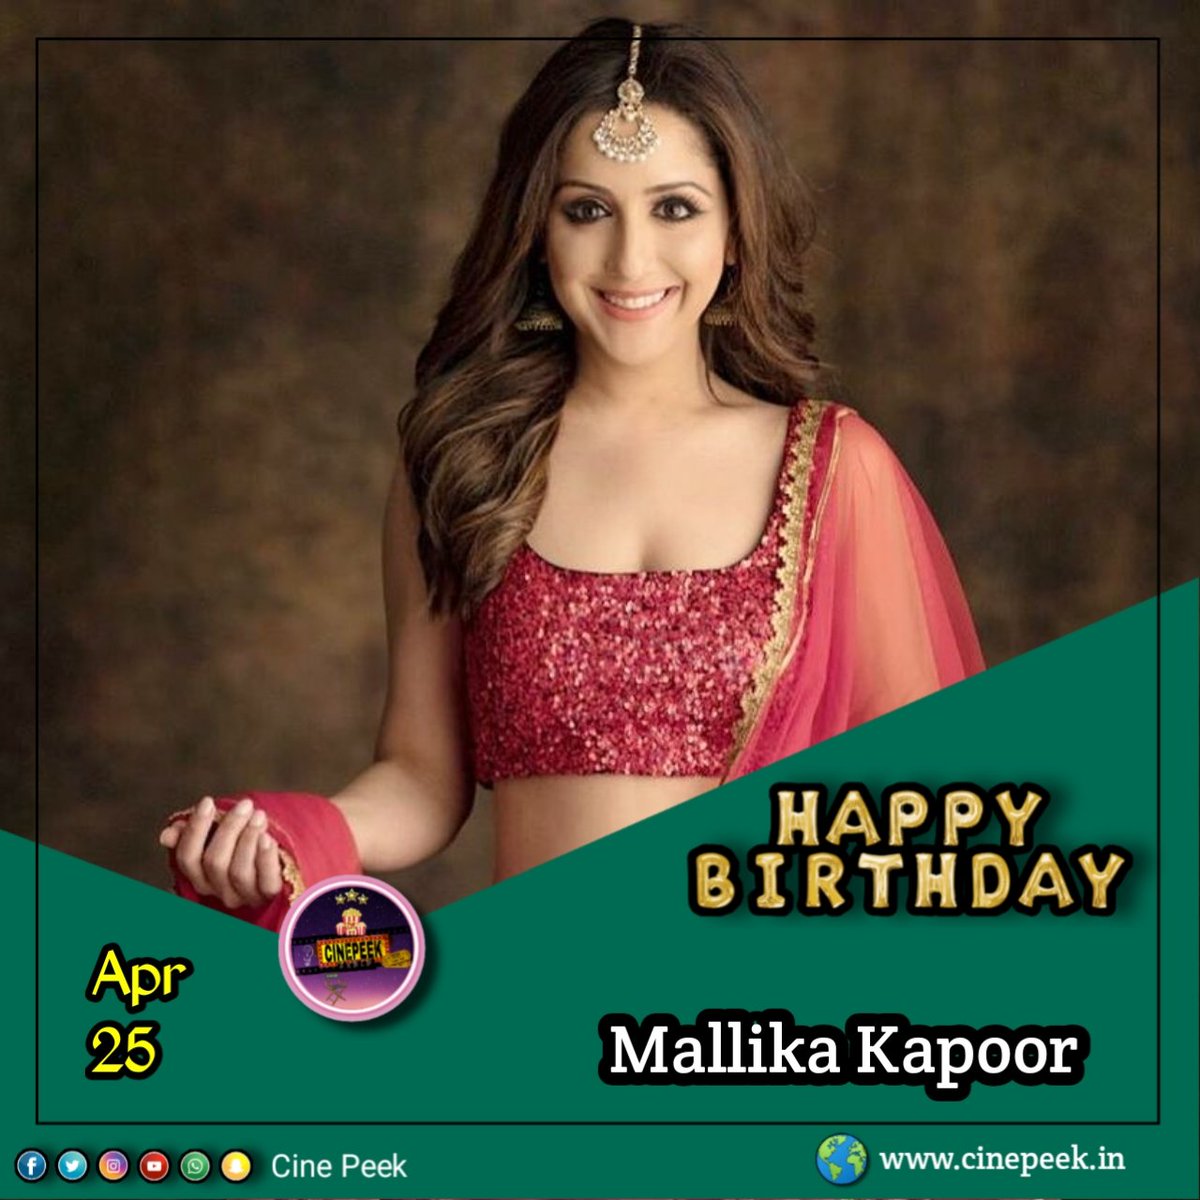 #CinePeek Team Wishing a Happy Birthday To Actress @imallikakapoor 🎂💐

#MallikaKapoor #HBDMallikaKapoor #HappyBirthdayMallikaKapoor #CinePeekBDayWishes